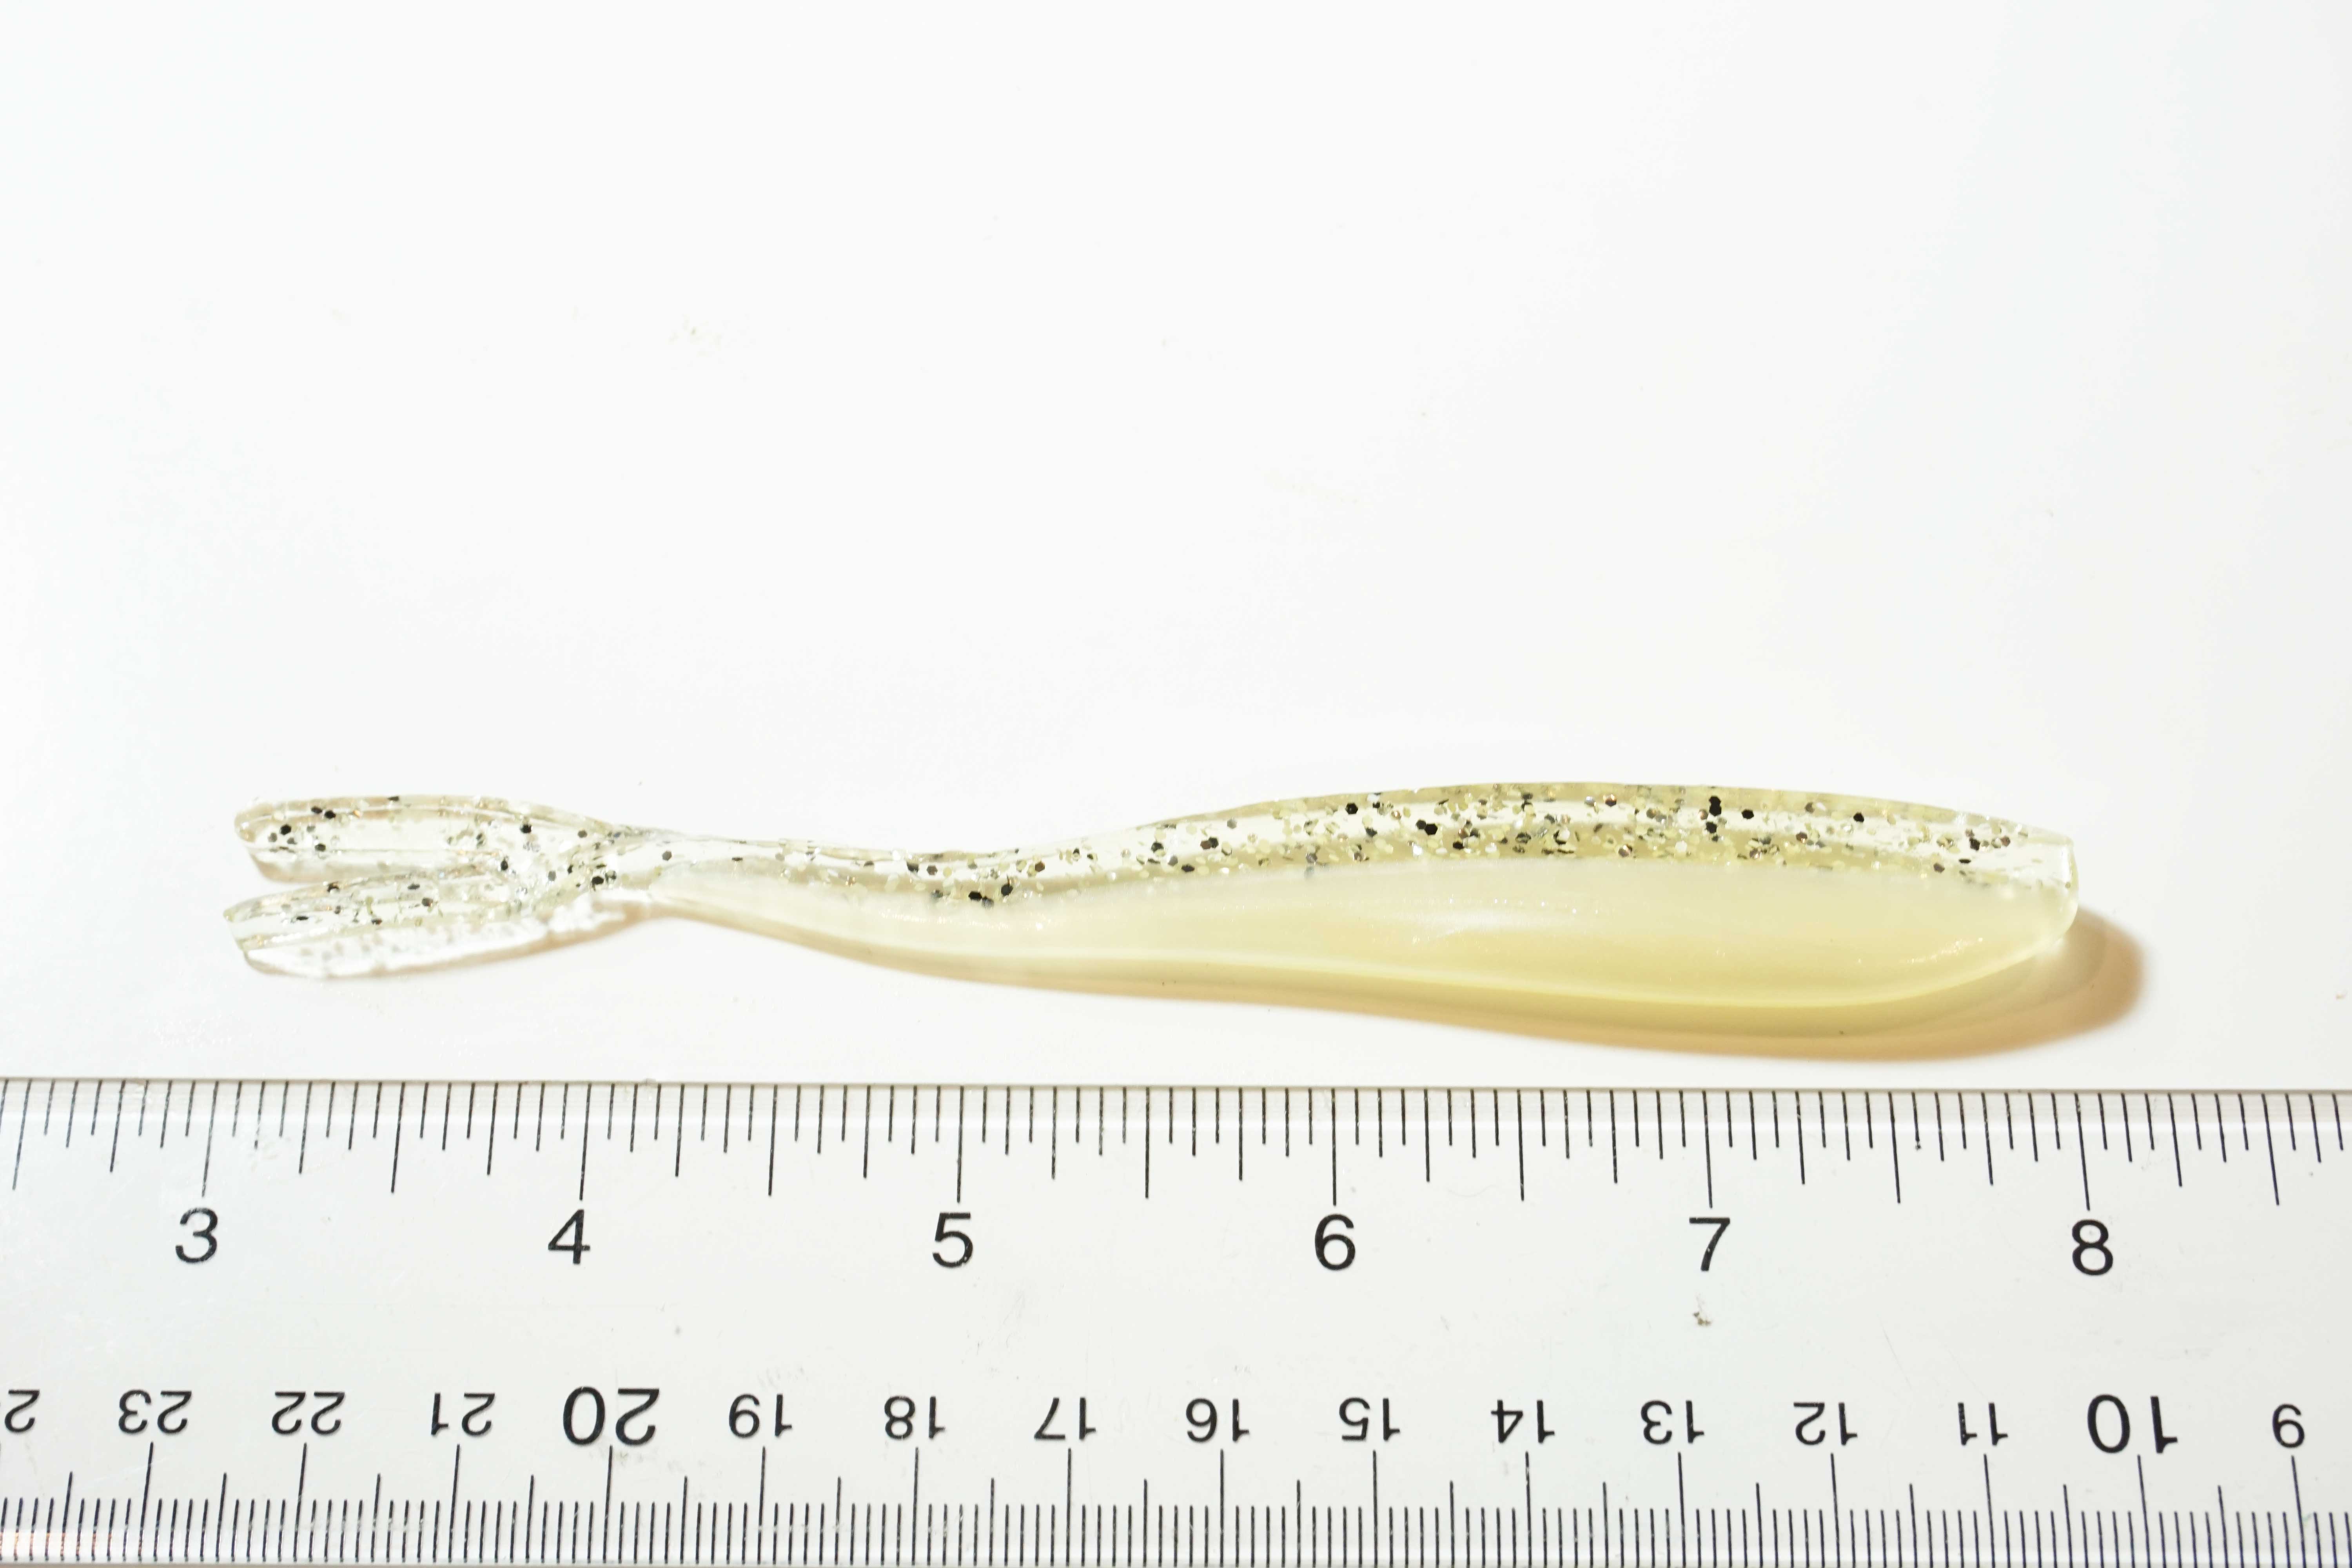 Soft Plastic Split Tail Jerk Bait 5" Salt/Pepper Gltr and Pearl - Click Image to Close